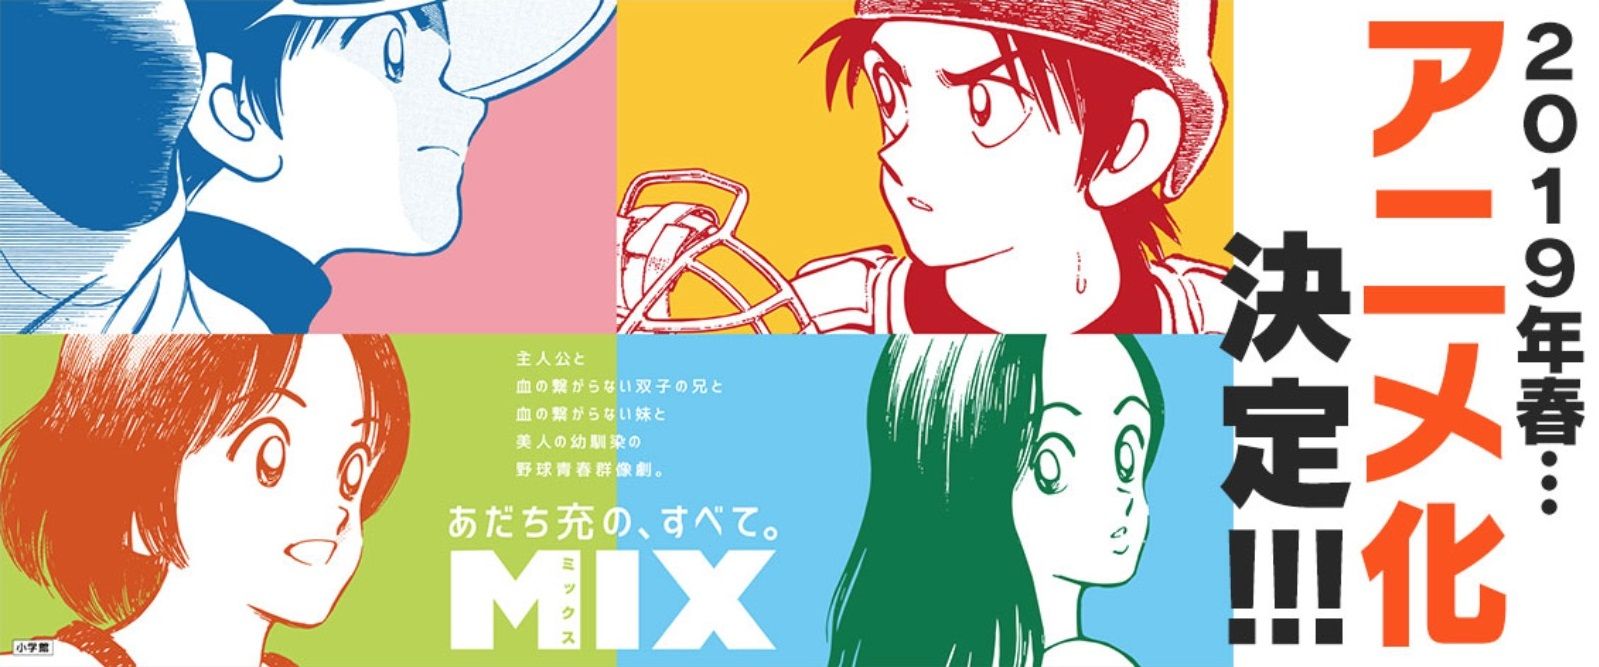 Mix-mitsuru-adachi-anime-annonce.jpg